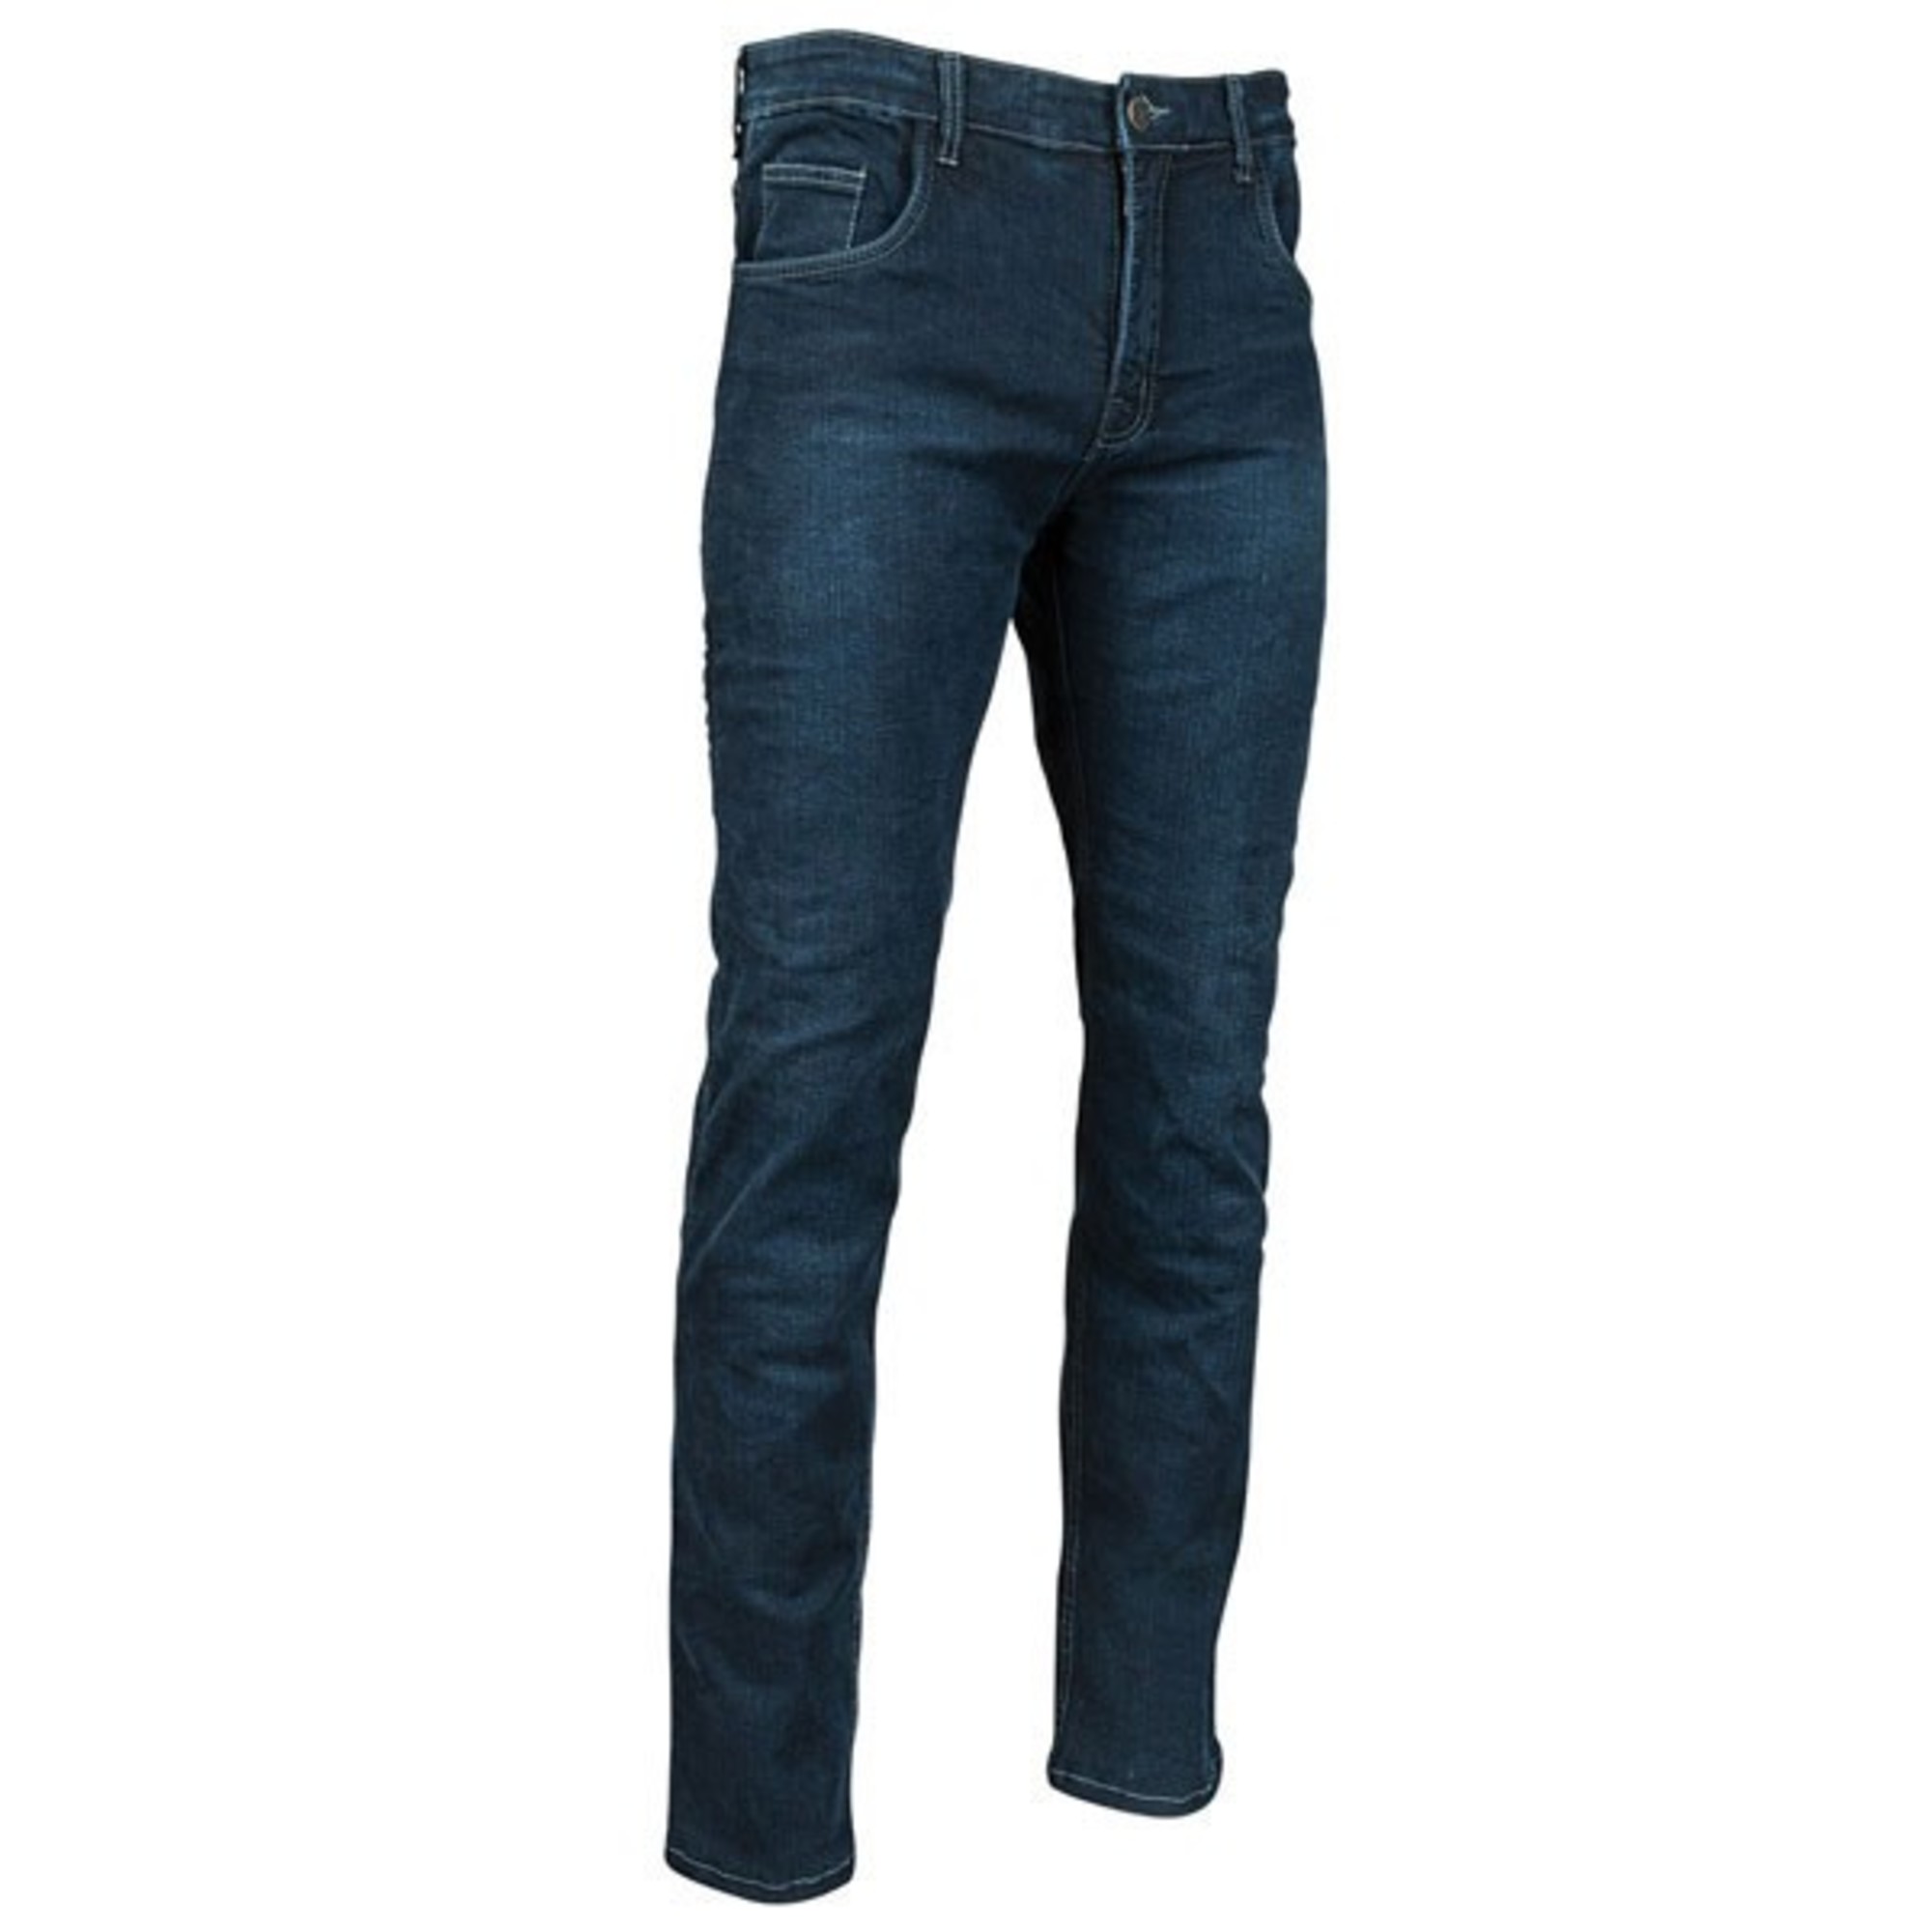 joe rocket textile pants for men mission reinforced jeans